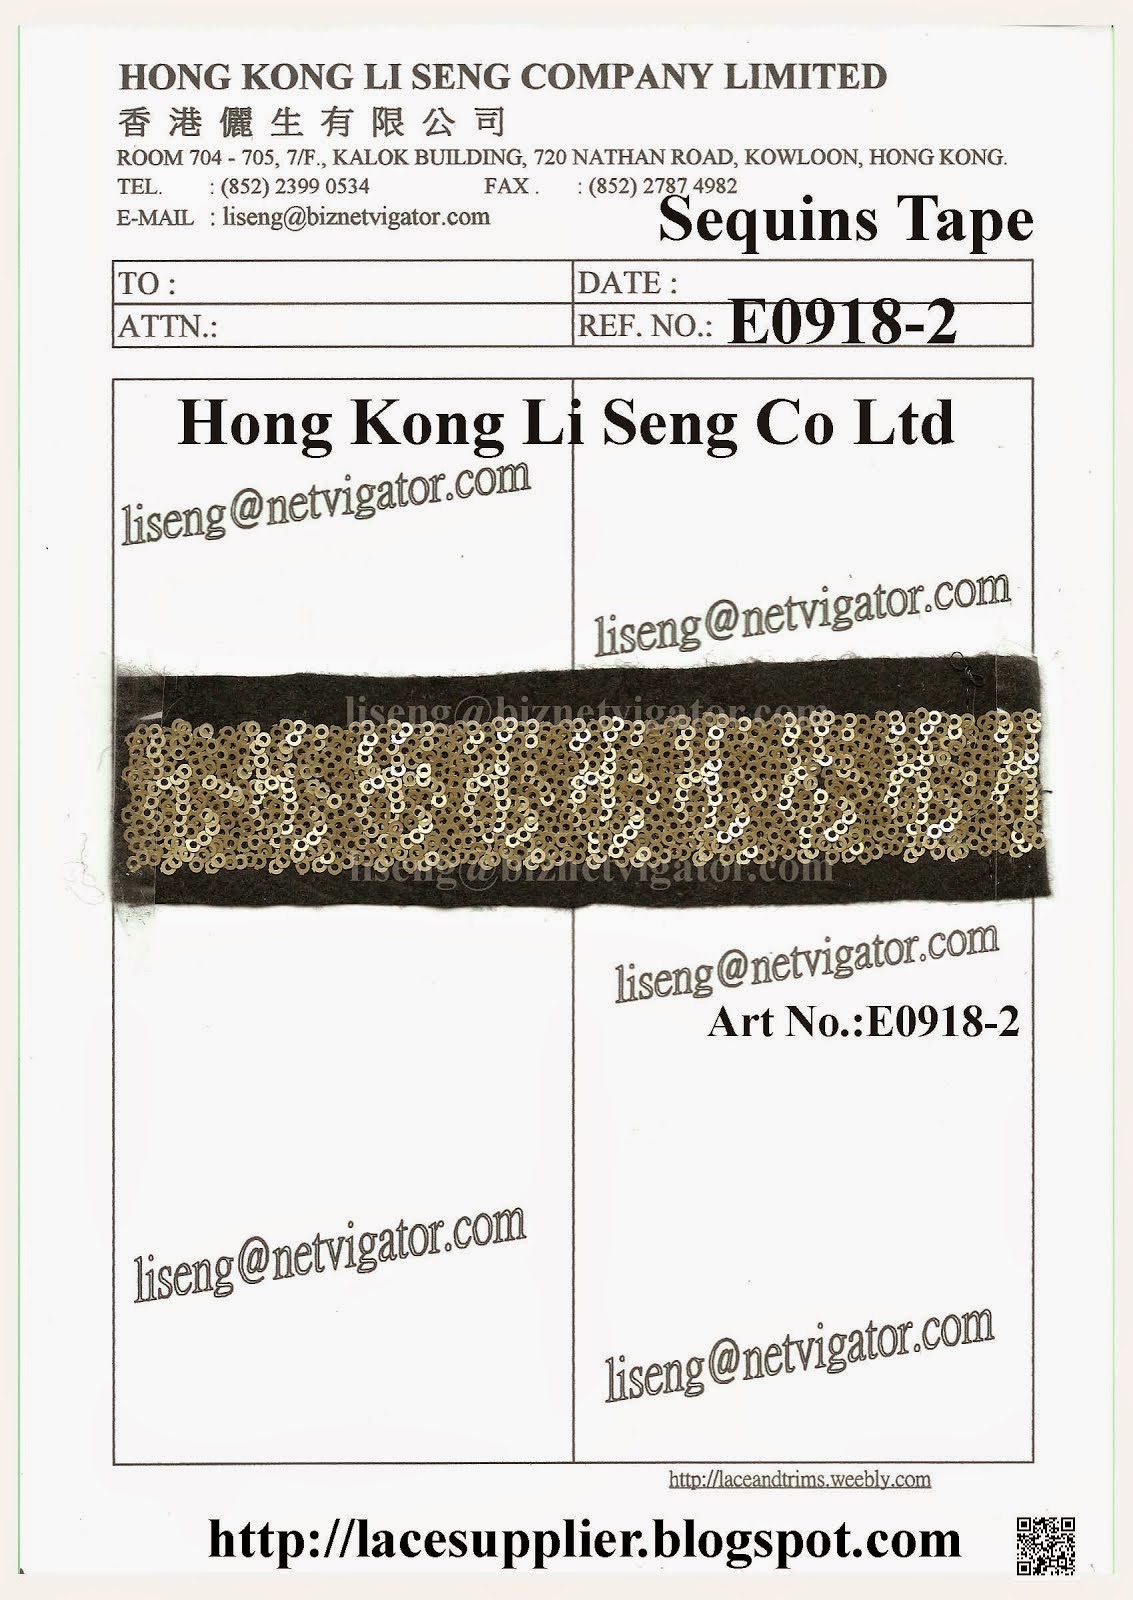 New Mini Sequins With Fabric Tape Manufacturing - Hong Kong Li Seng Co Ltd